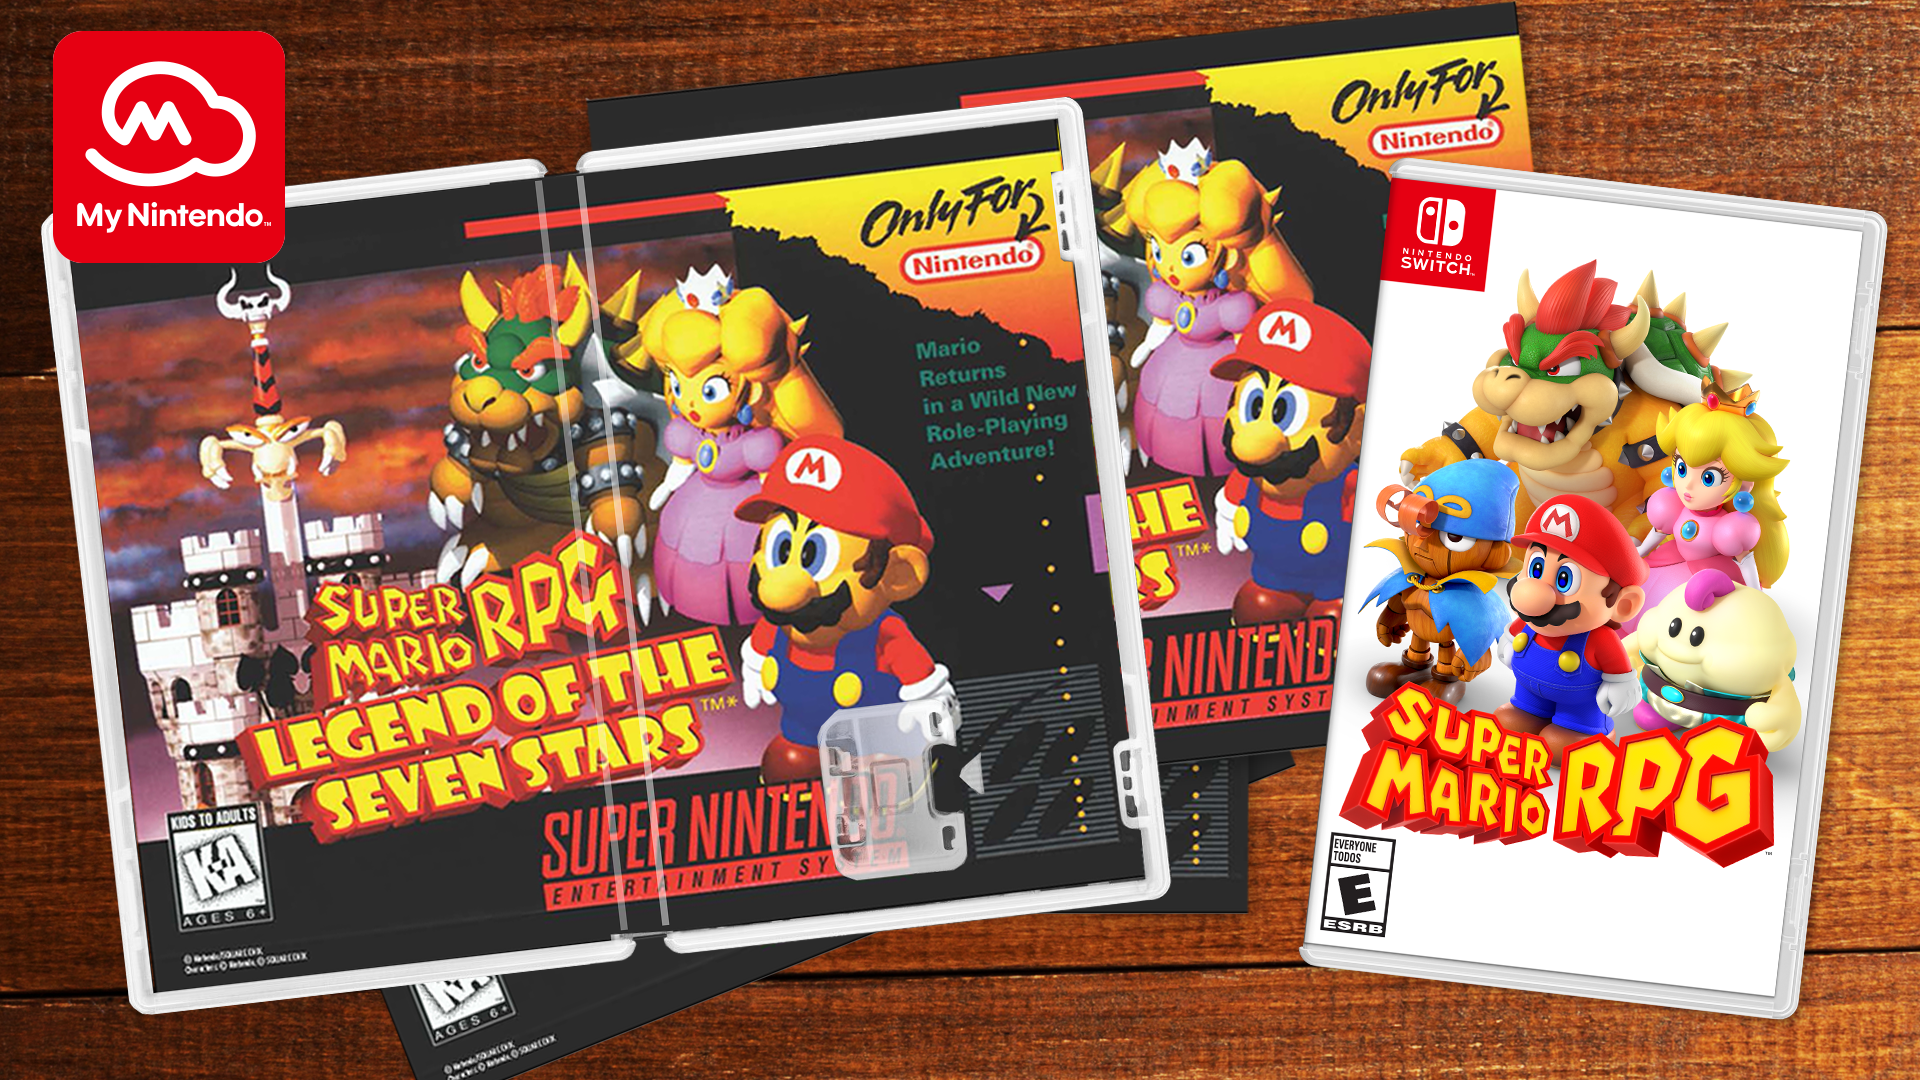 Printable: Super Mario RPG™ alternate reverse cover artwork